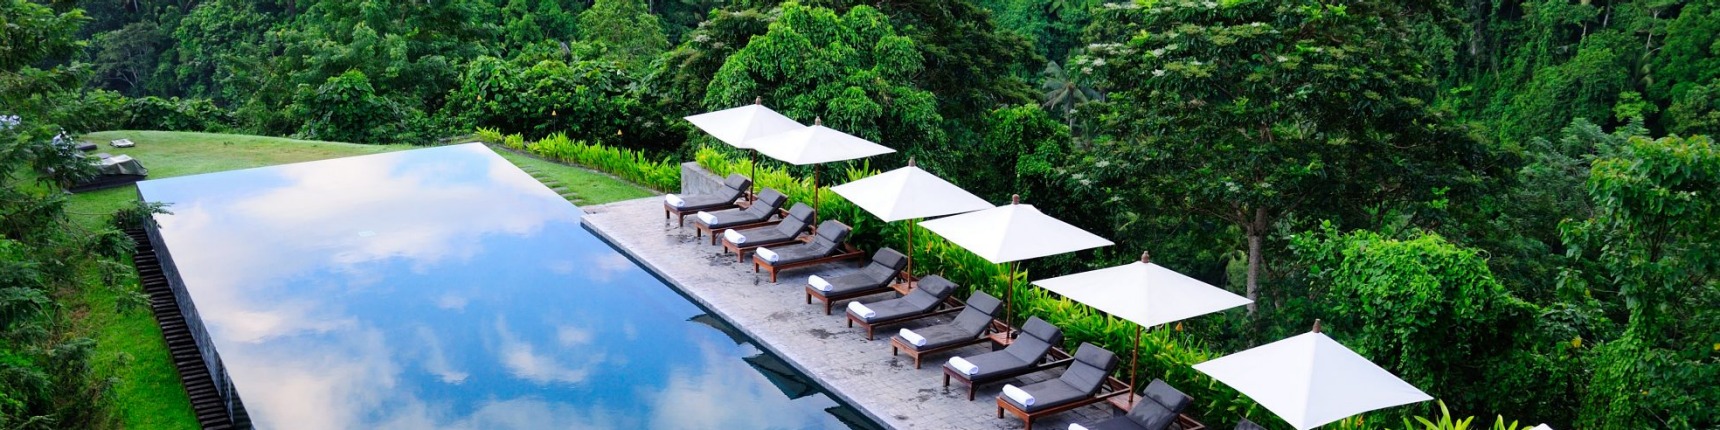 Bali, resort, hills